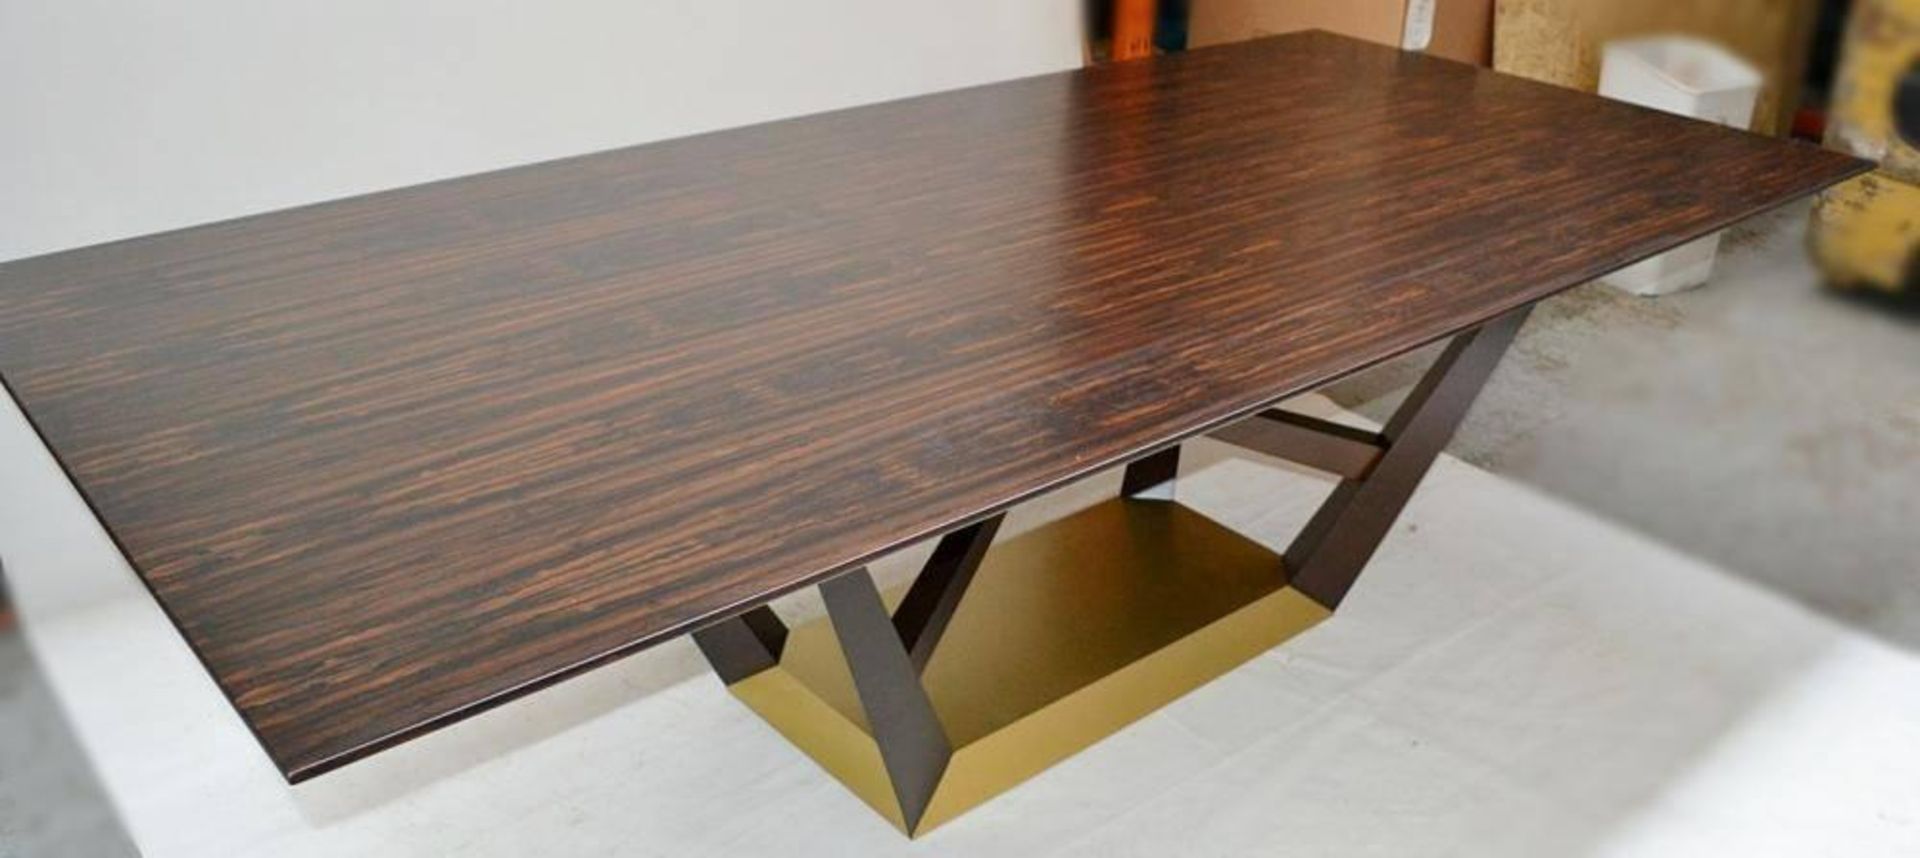 1 x PORADA Ellington Dining Table - 2.2 Metres In Length - Original RRP £7,495 - Image 5 of 12